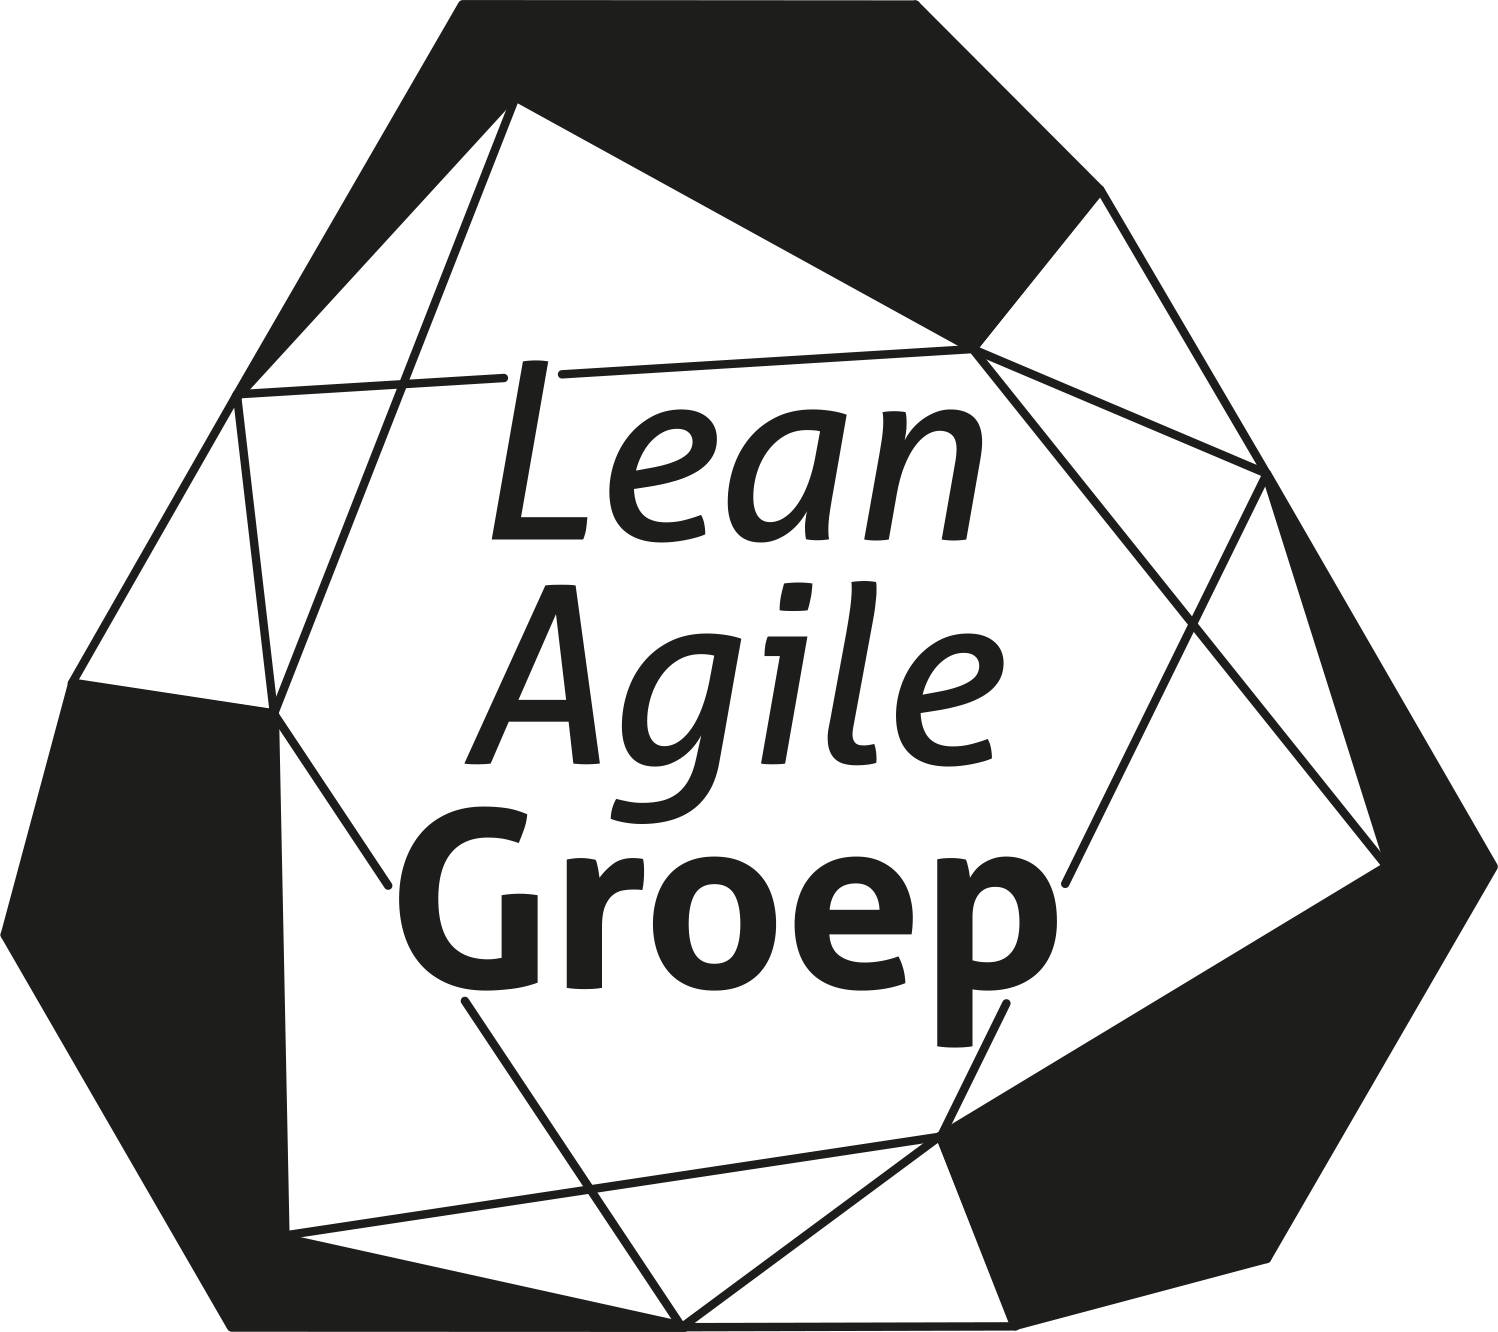 Lean six sigma group logo